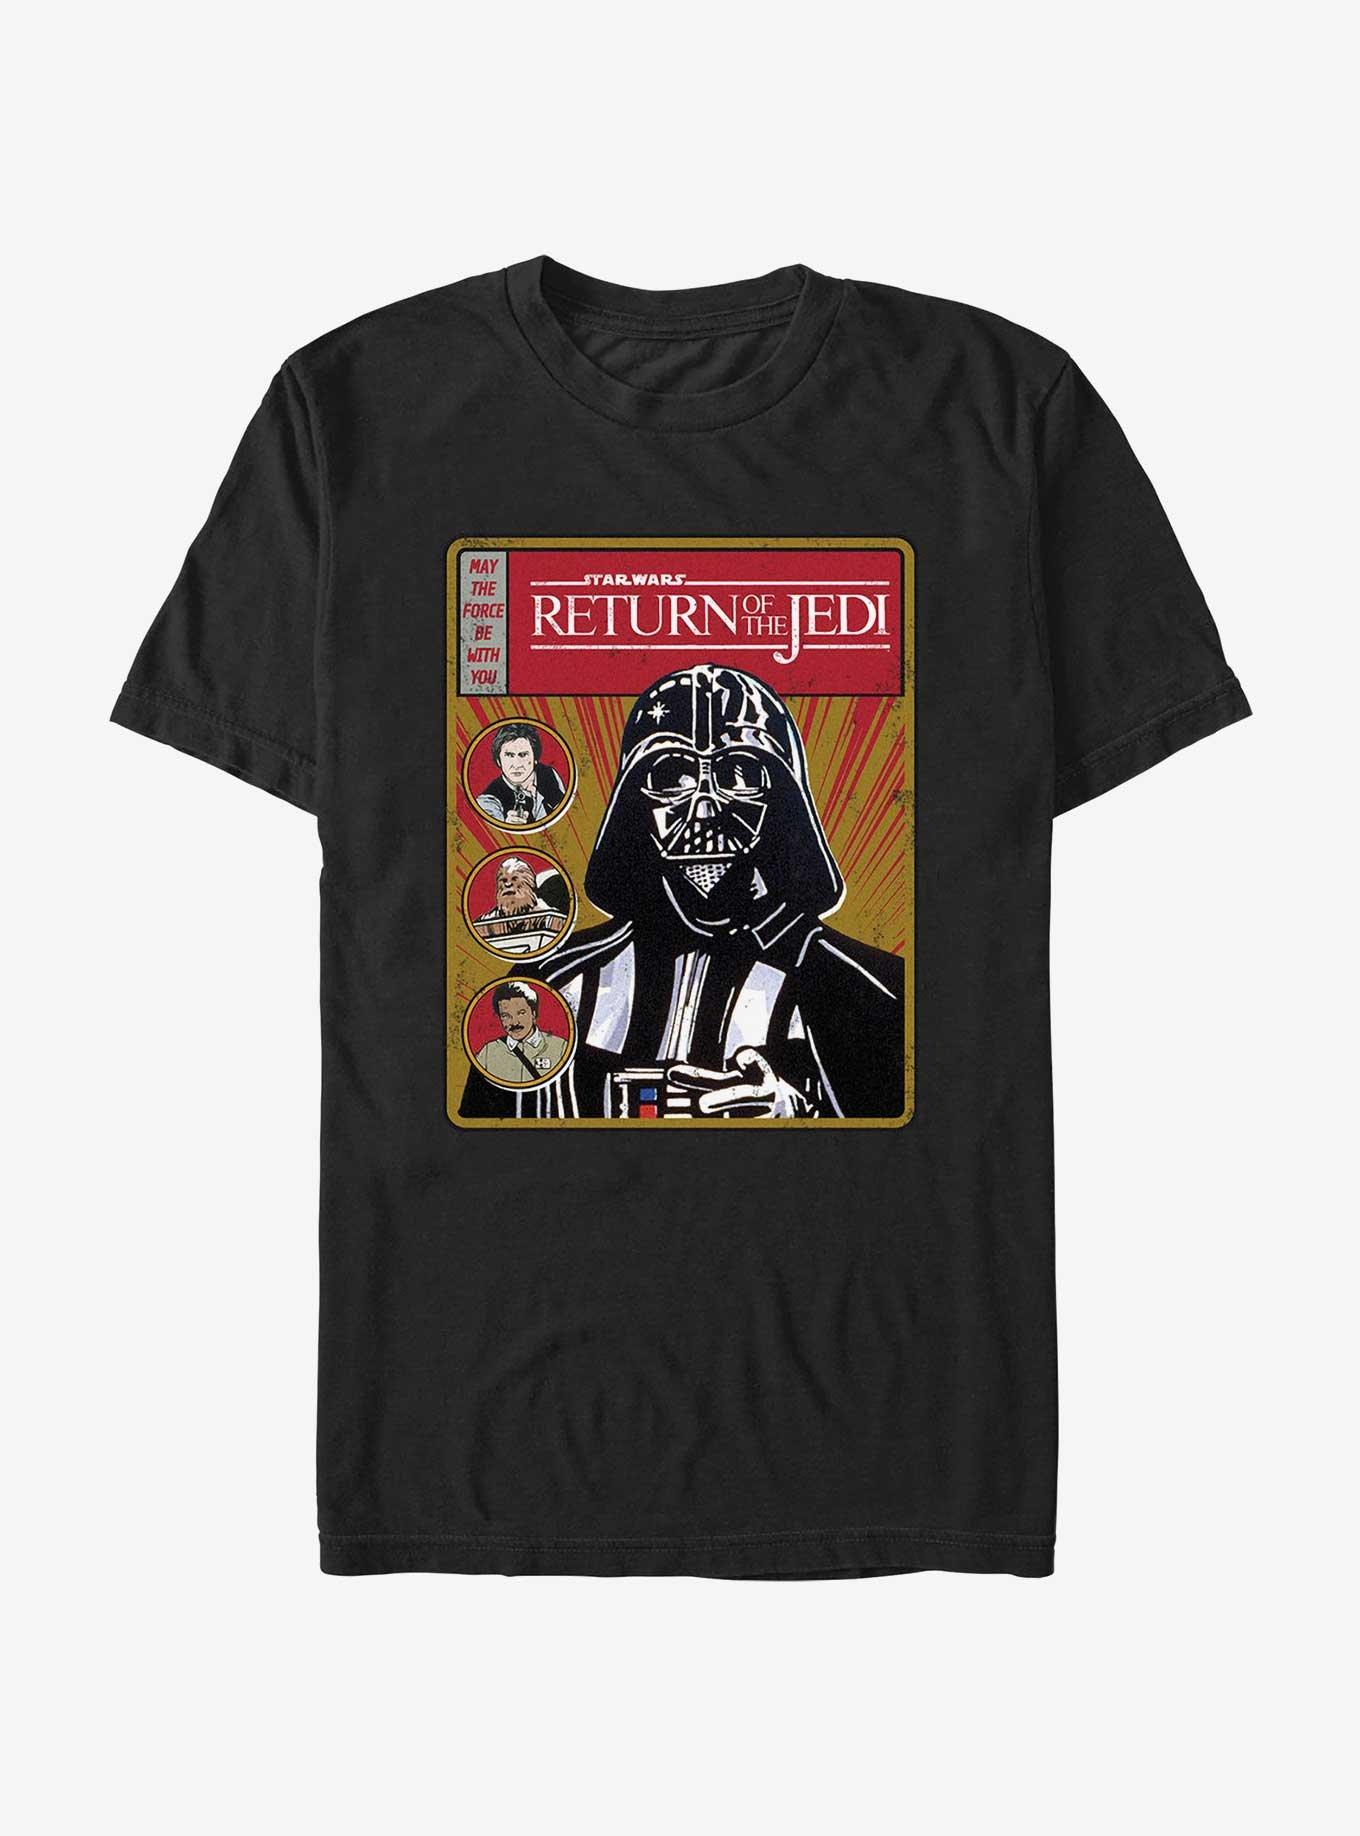 Star Wars Return of the Jedi 40th Anniversary Darth Vader Cover T-Shirt